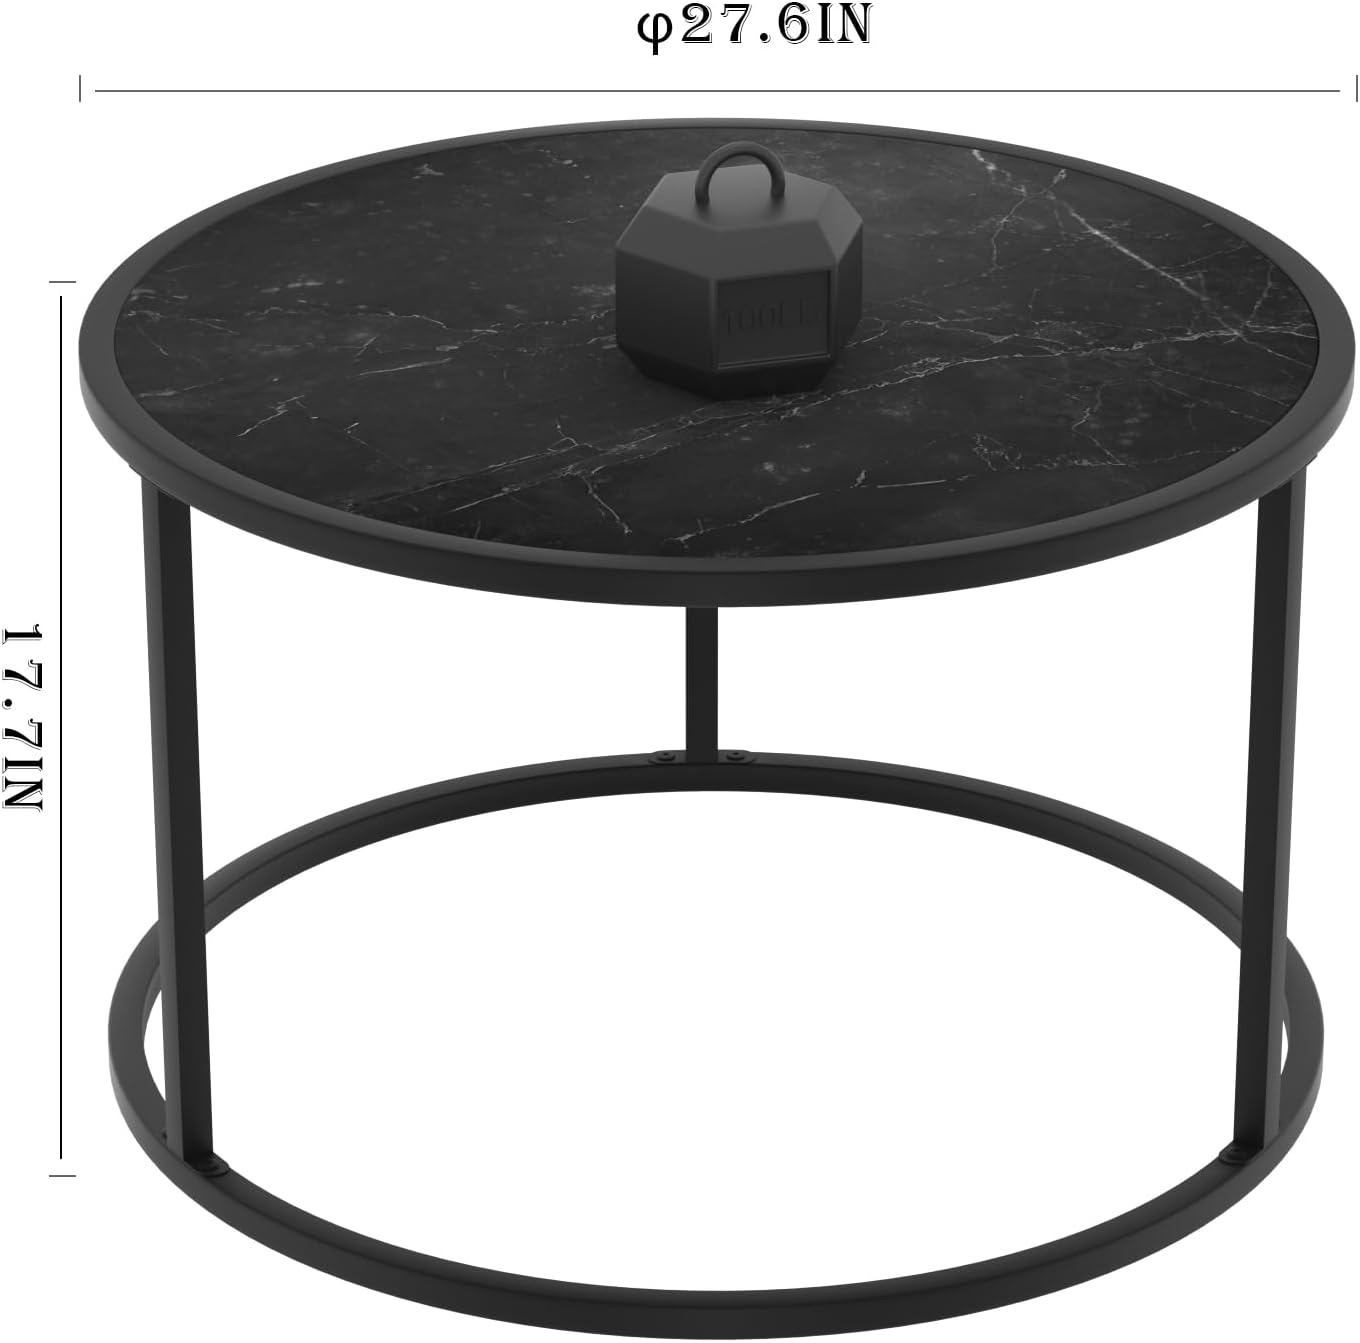 SAYGOER Round Black Marble Coffee Table dimensions